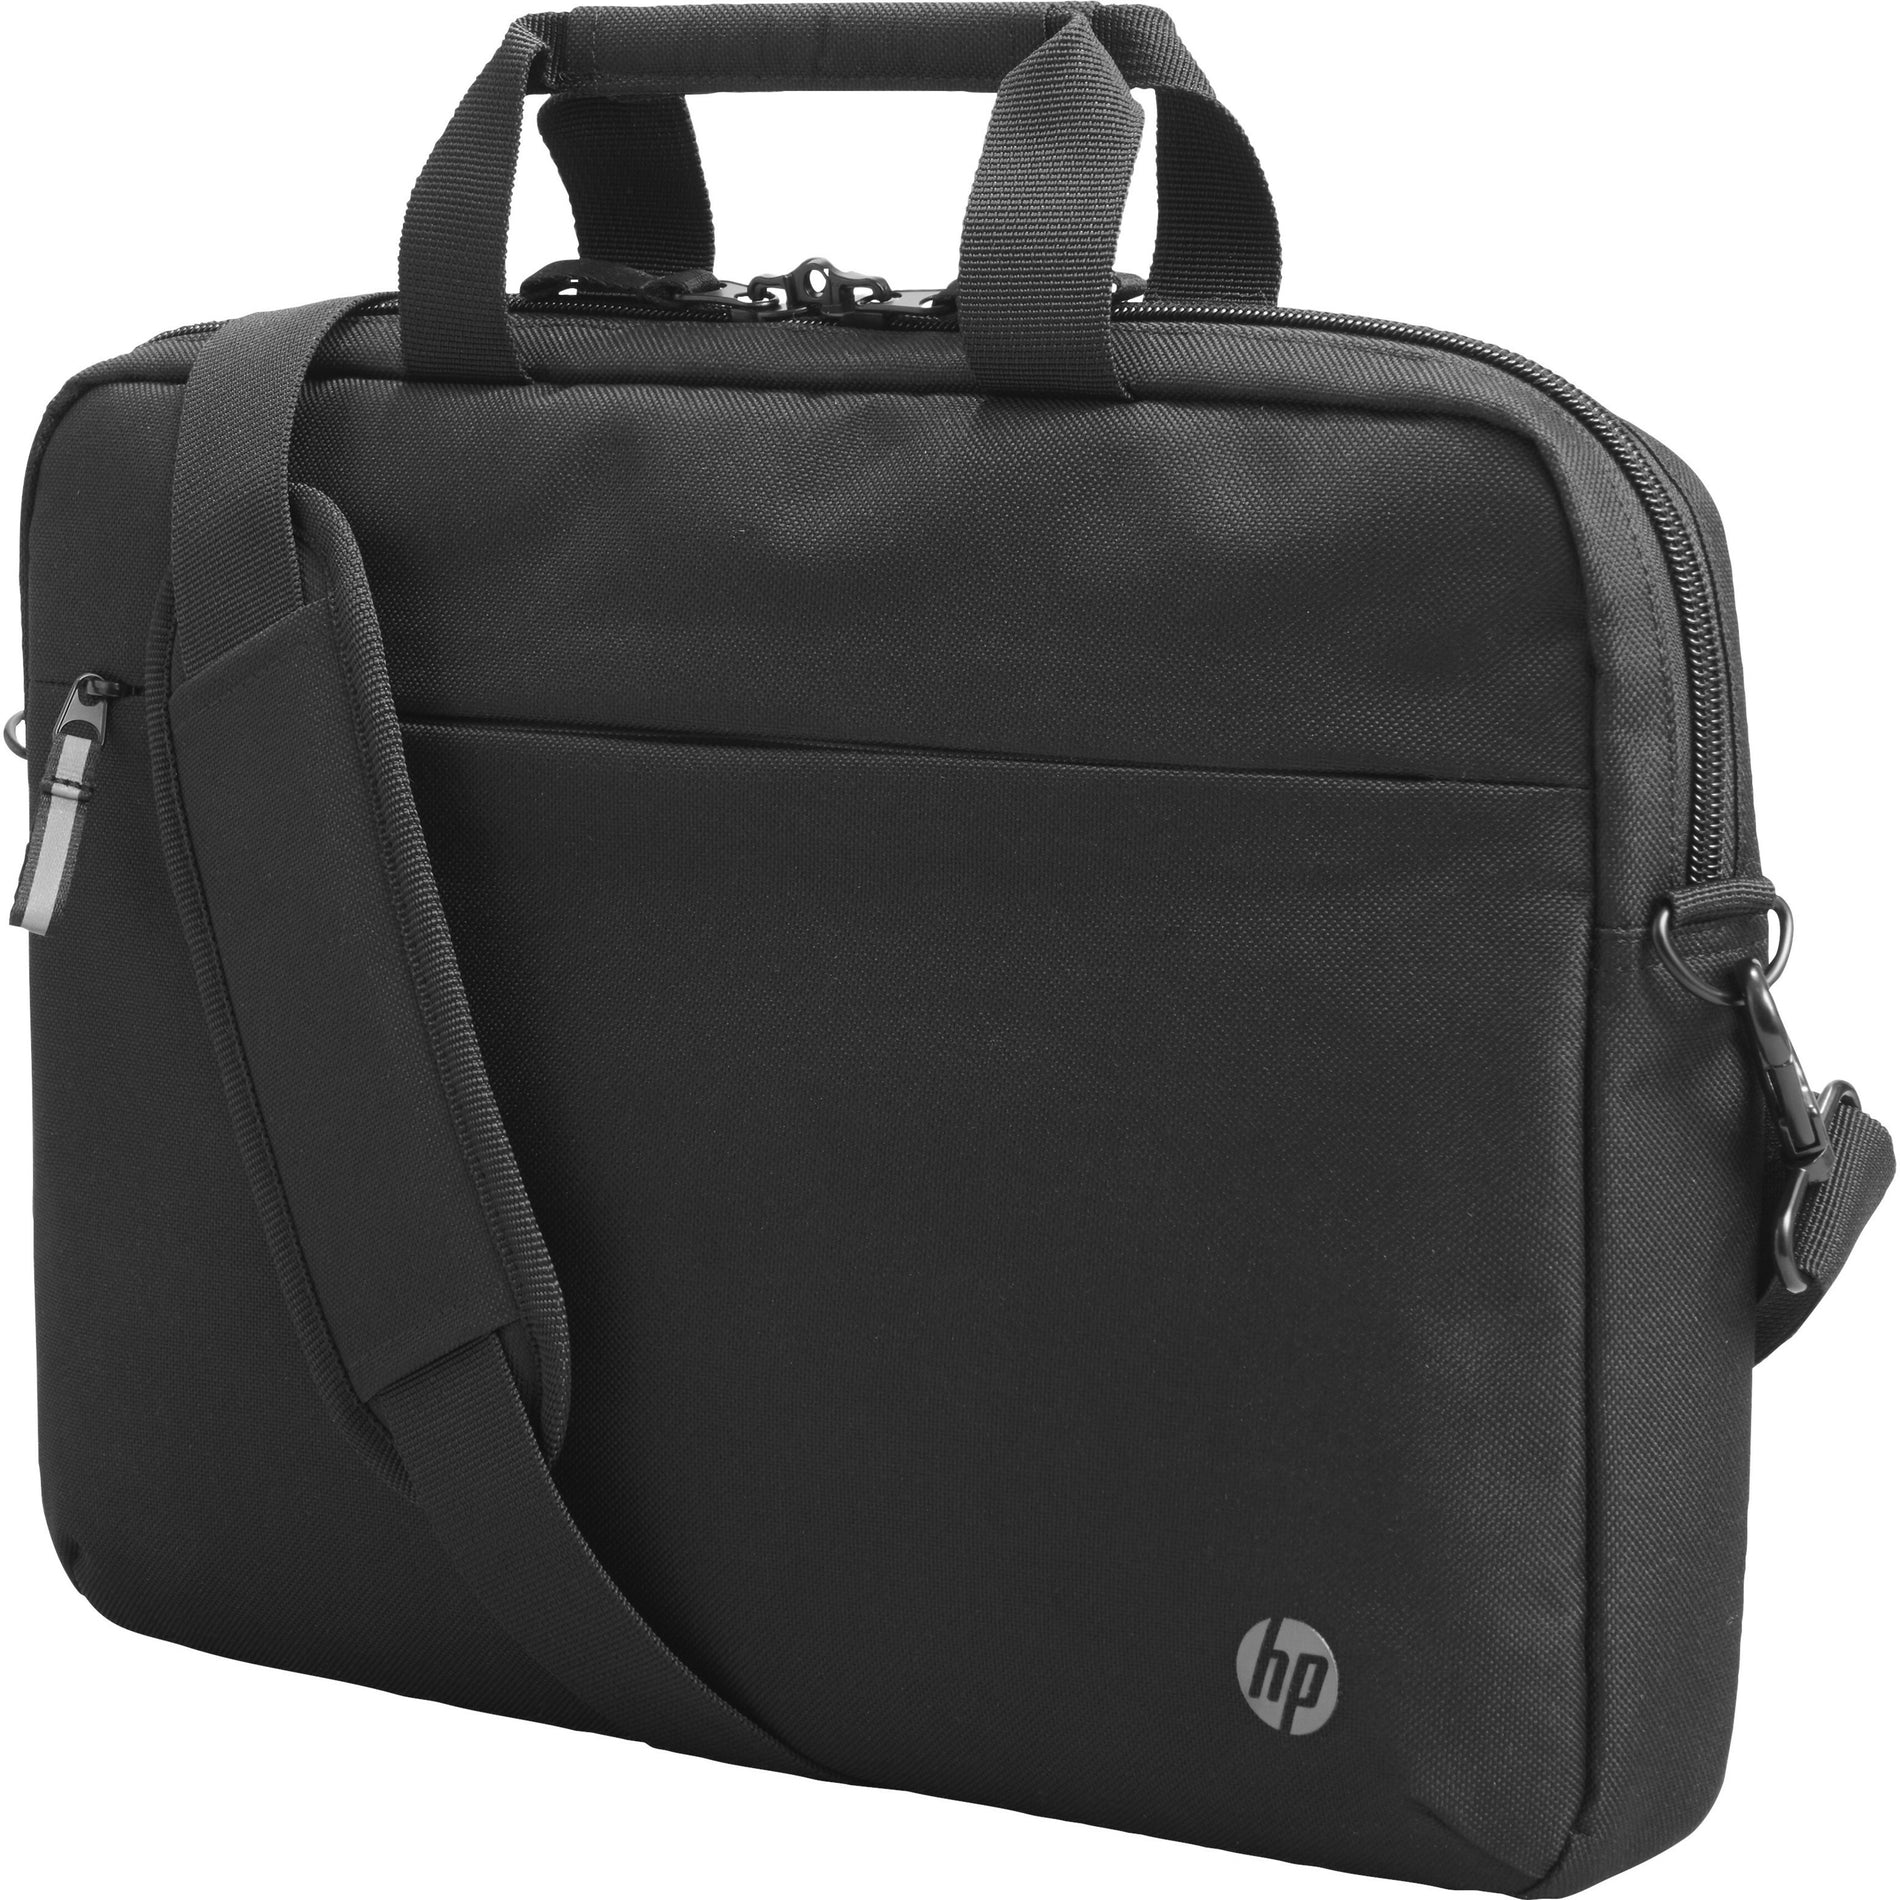 HP 3E5F9UT Renew Business 14.1-inch Laptop Bag, Water Resistant, 8 Pockets, Black